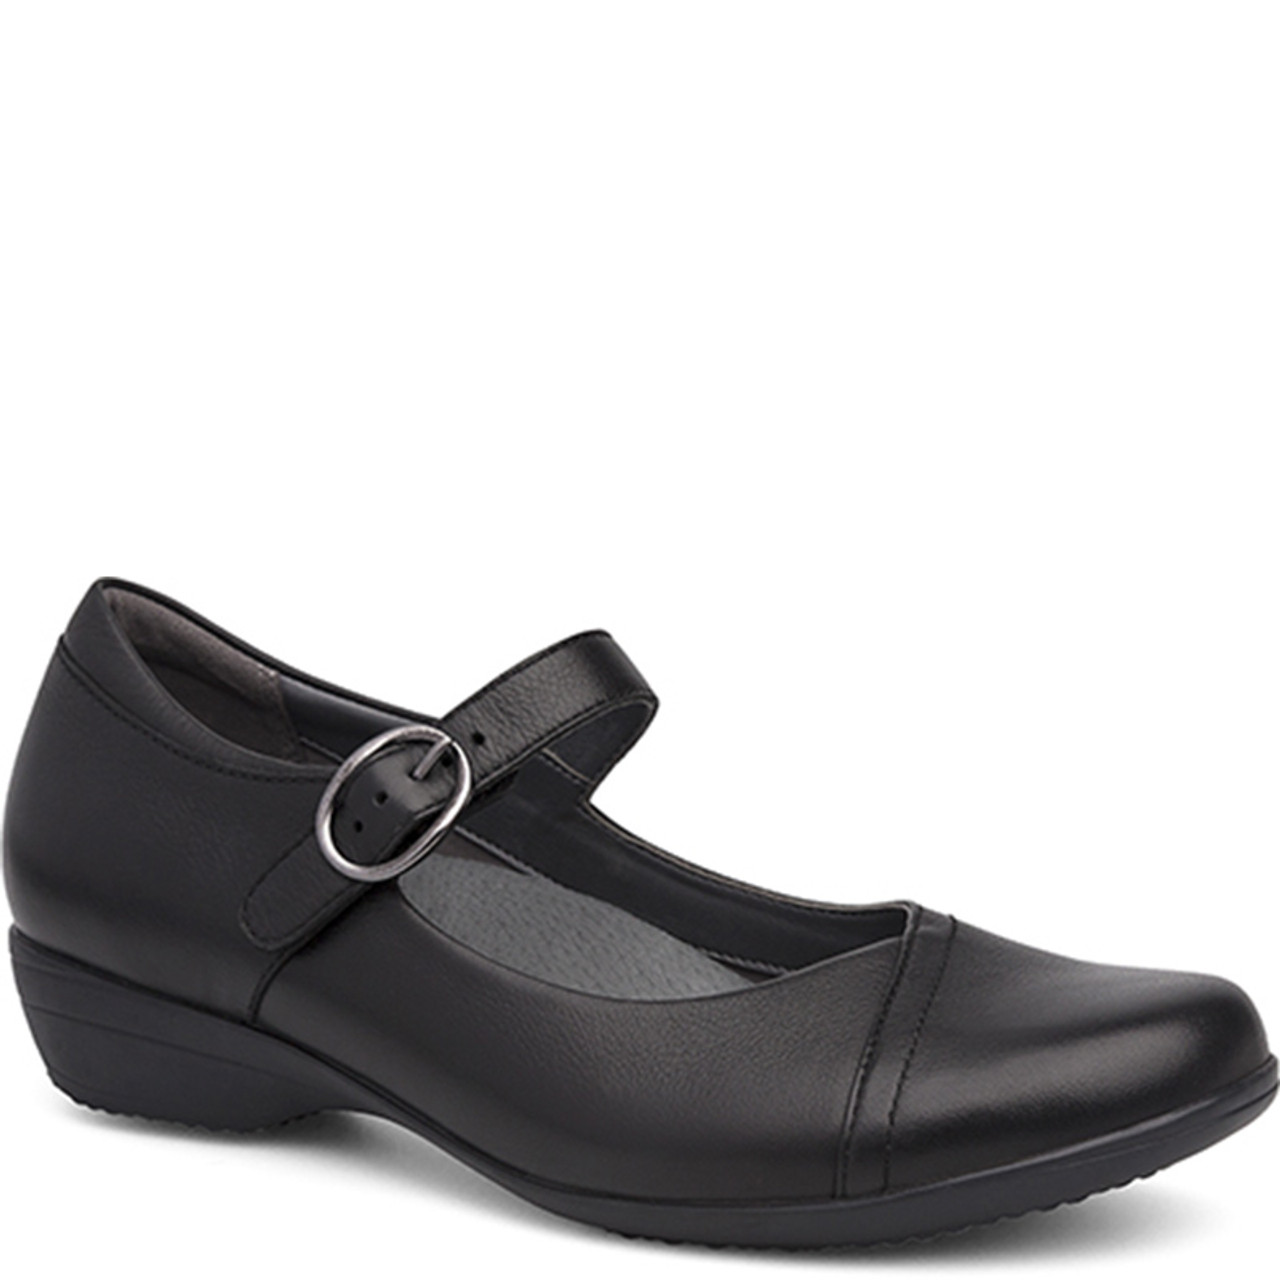 dansko black shoes